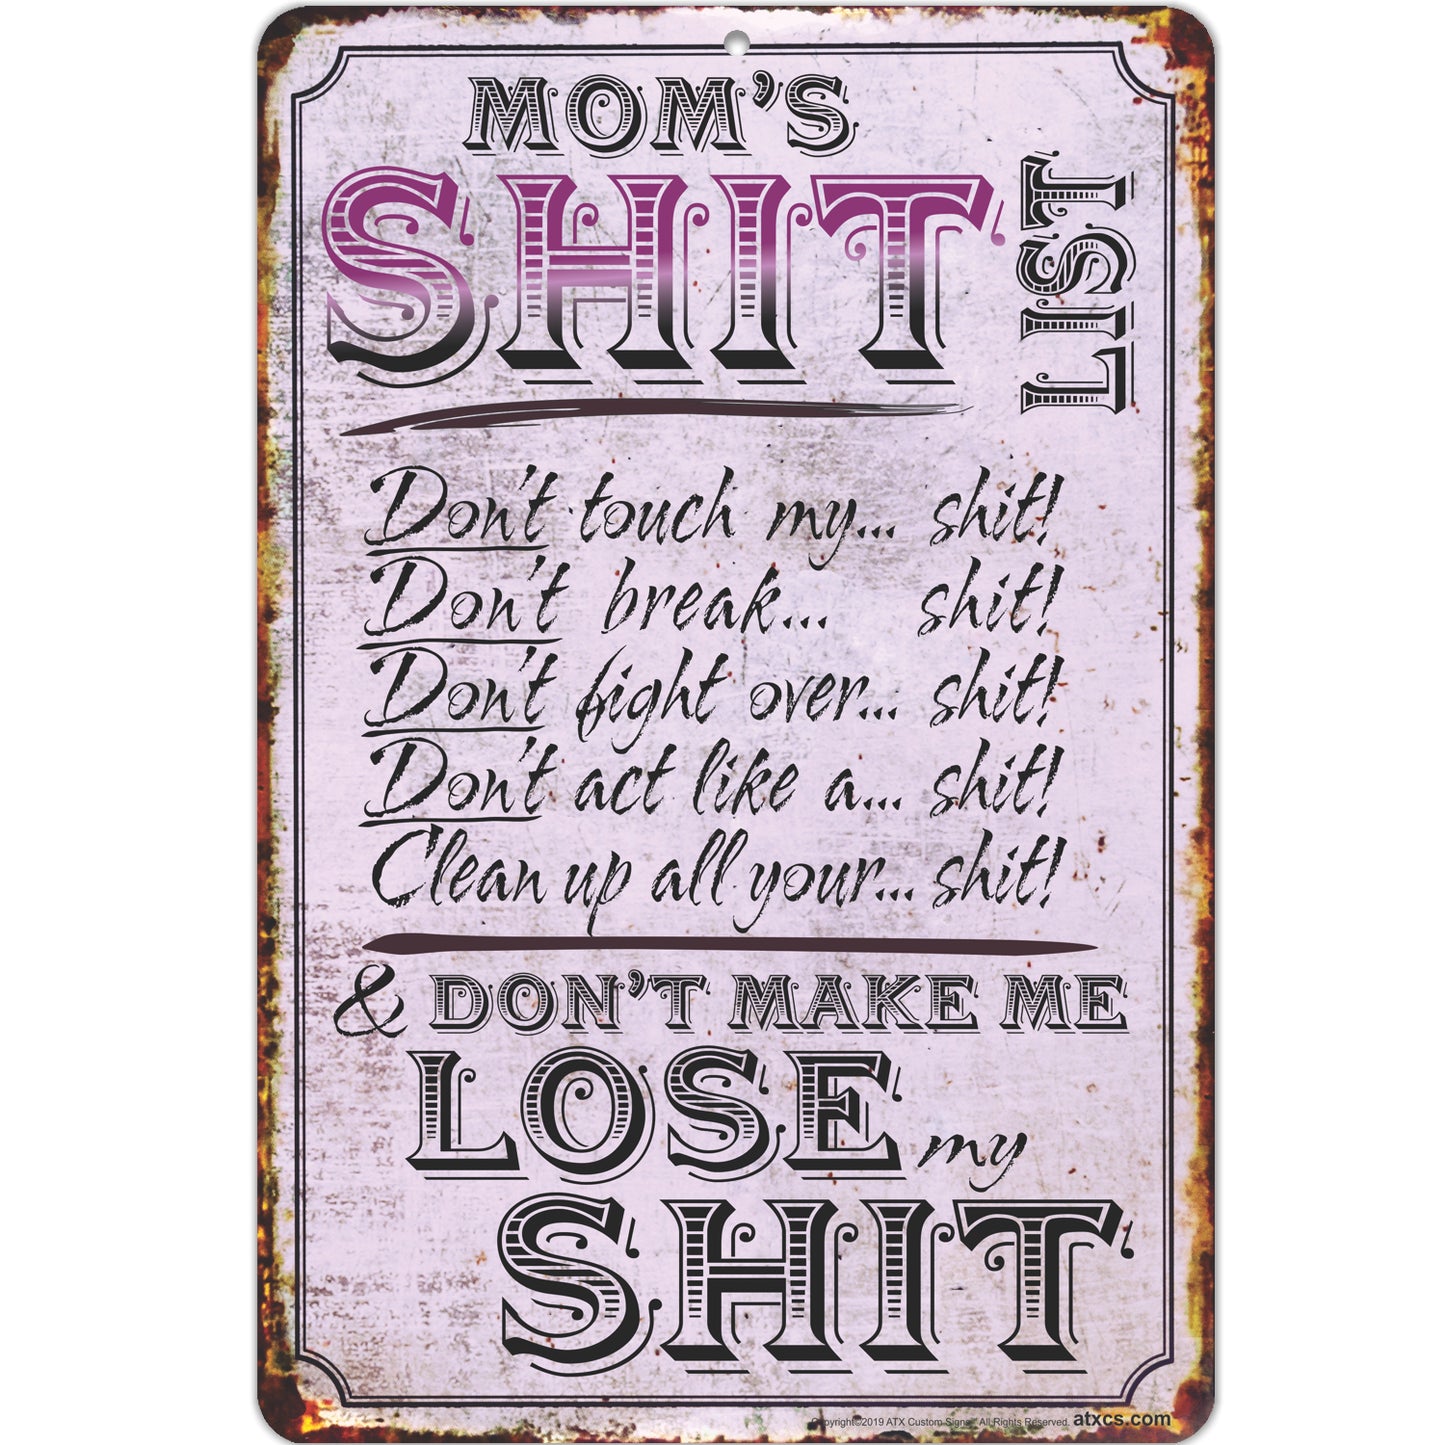 Mom's Shit list. Don't make me Lose my Shit